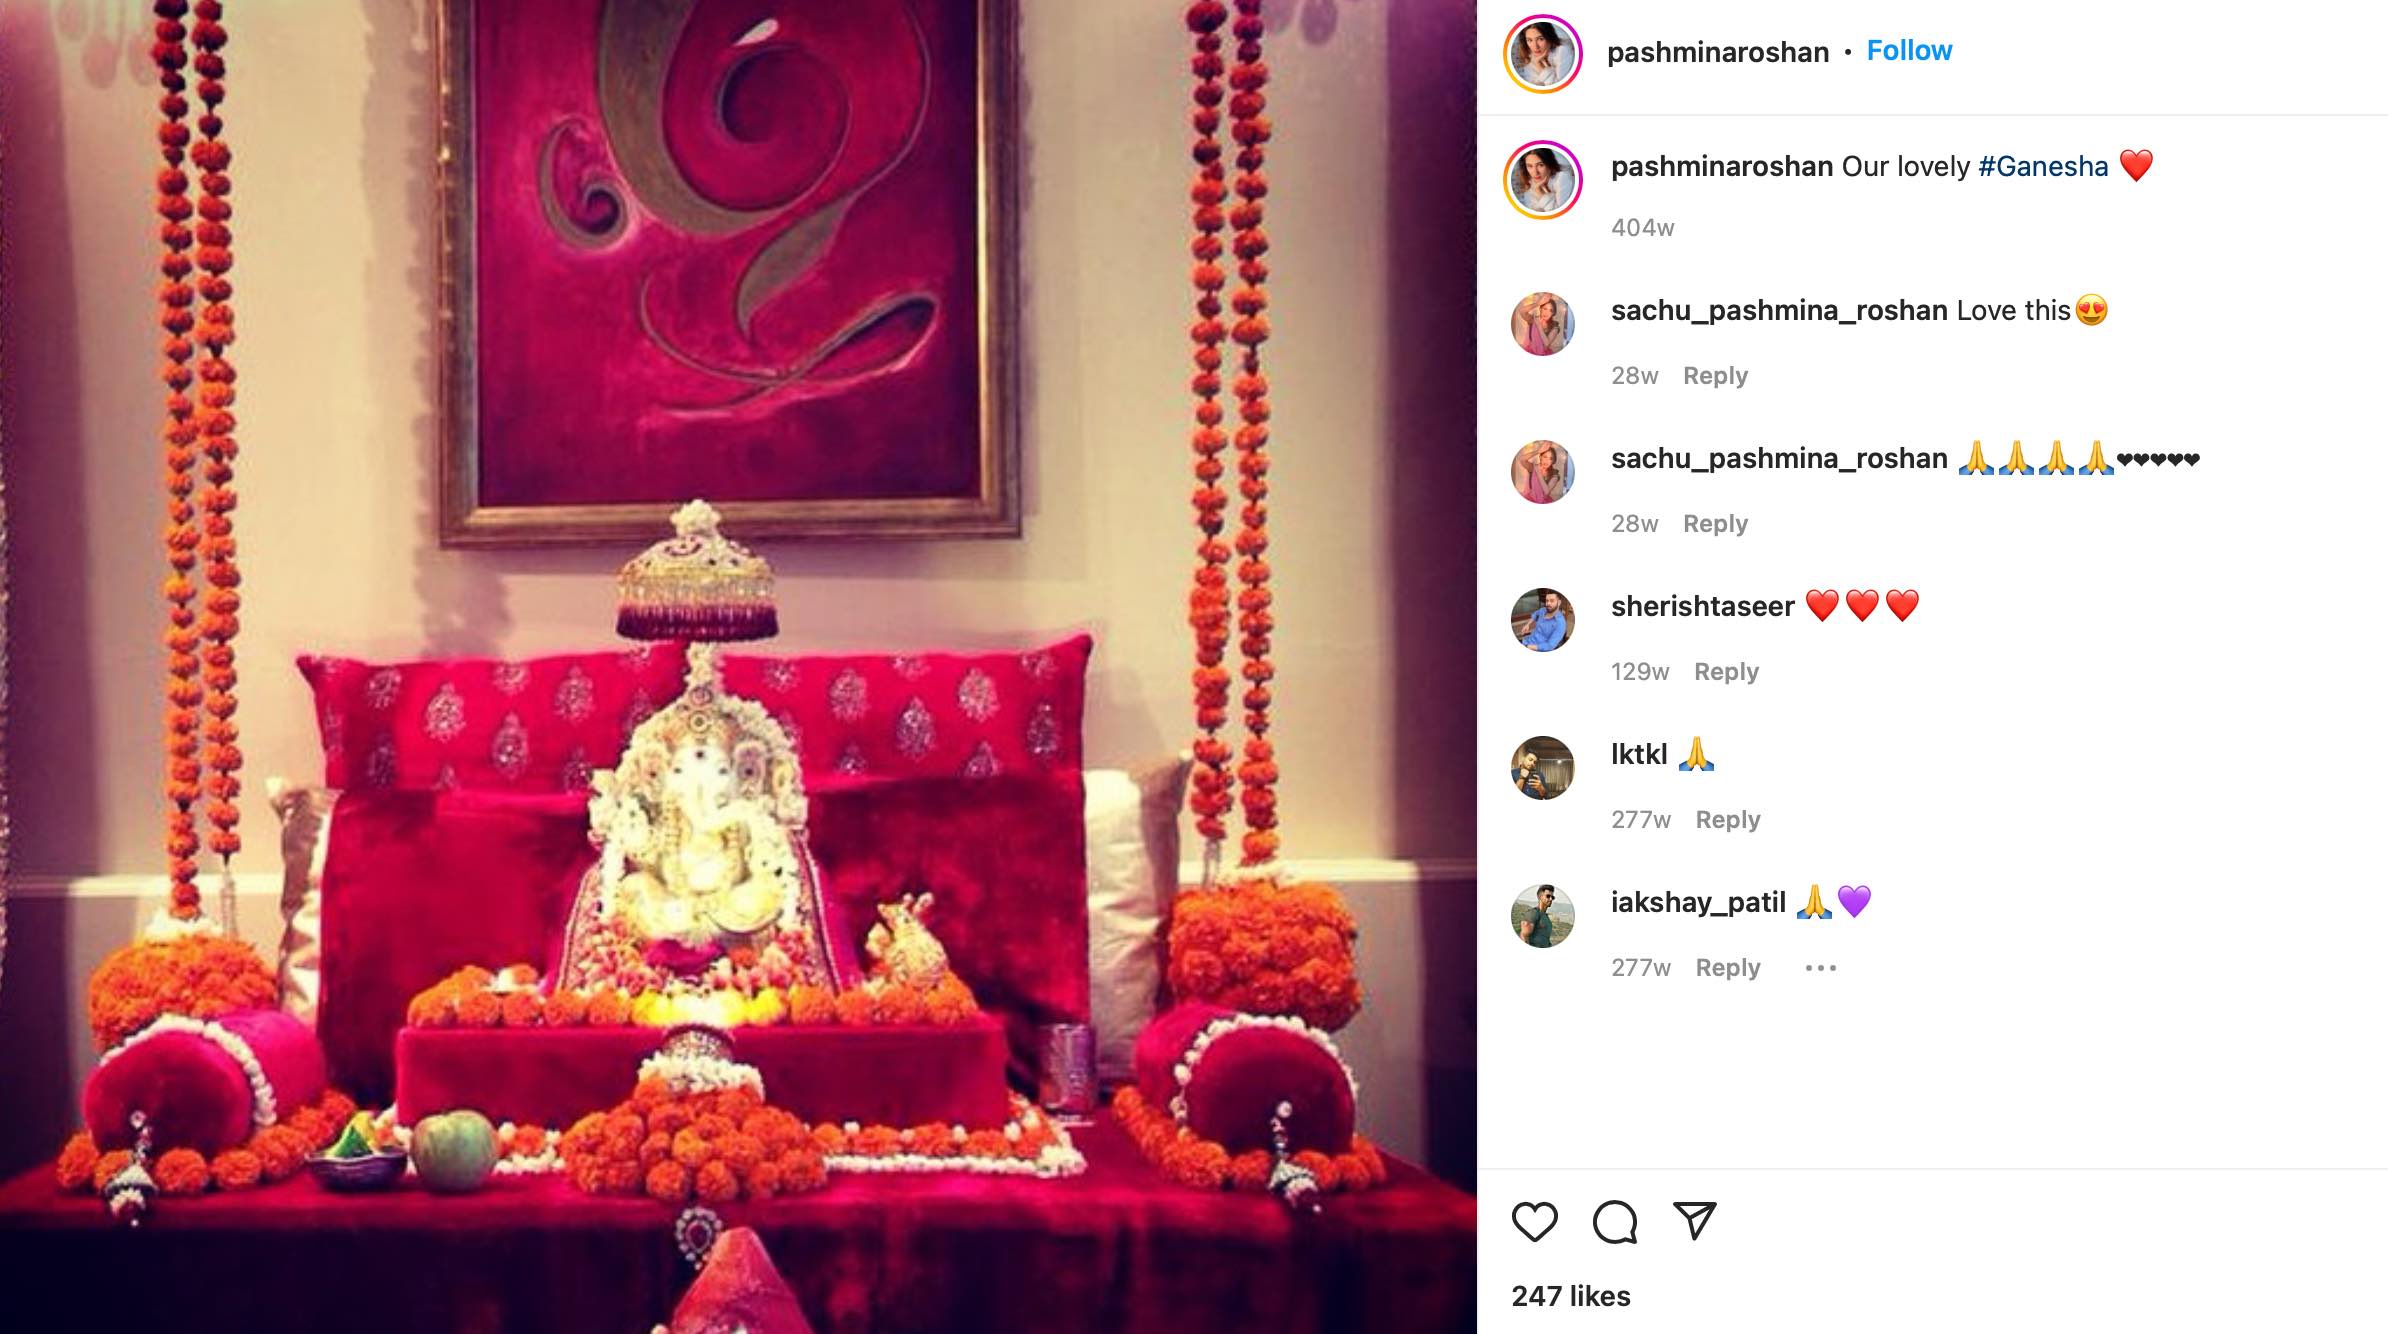 Pashmina Roshan follows Lord Ganesha